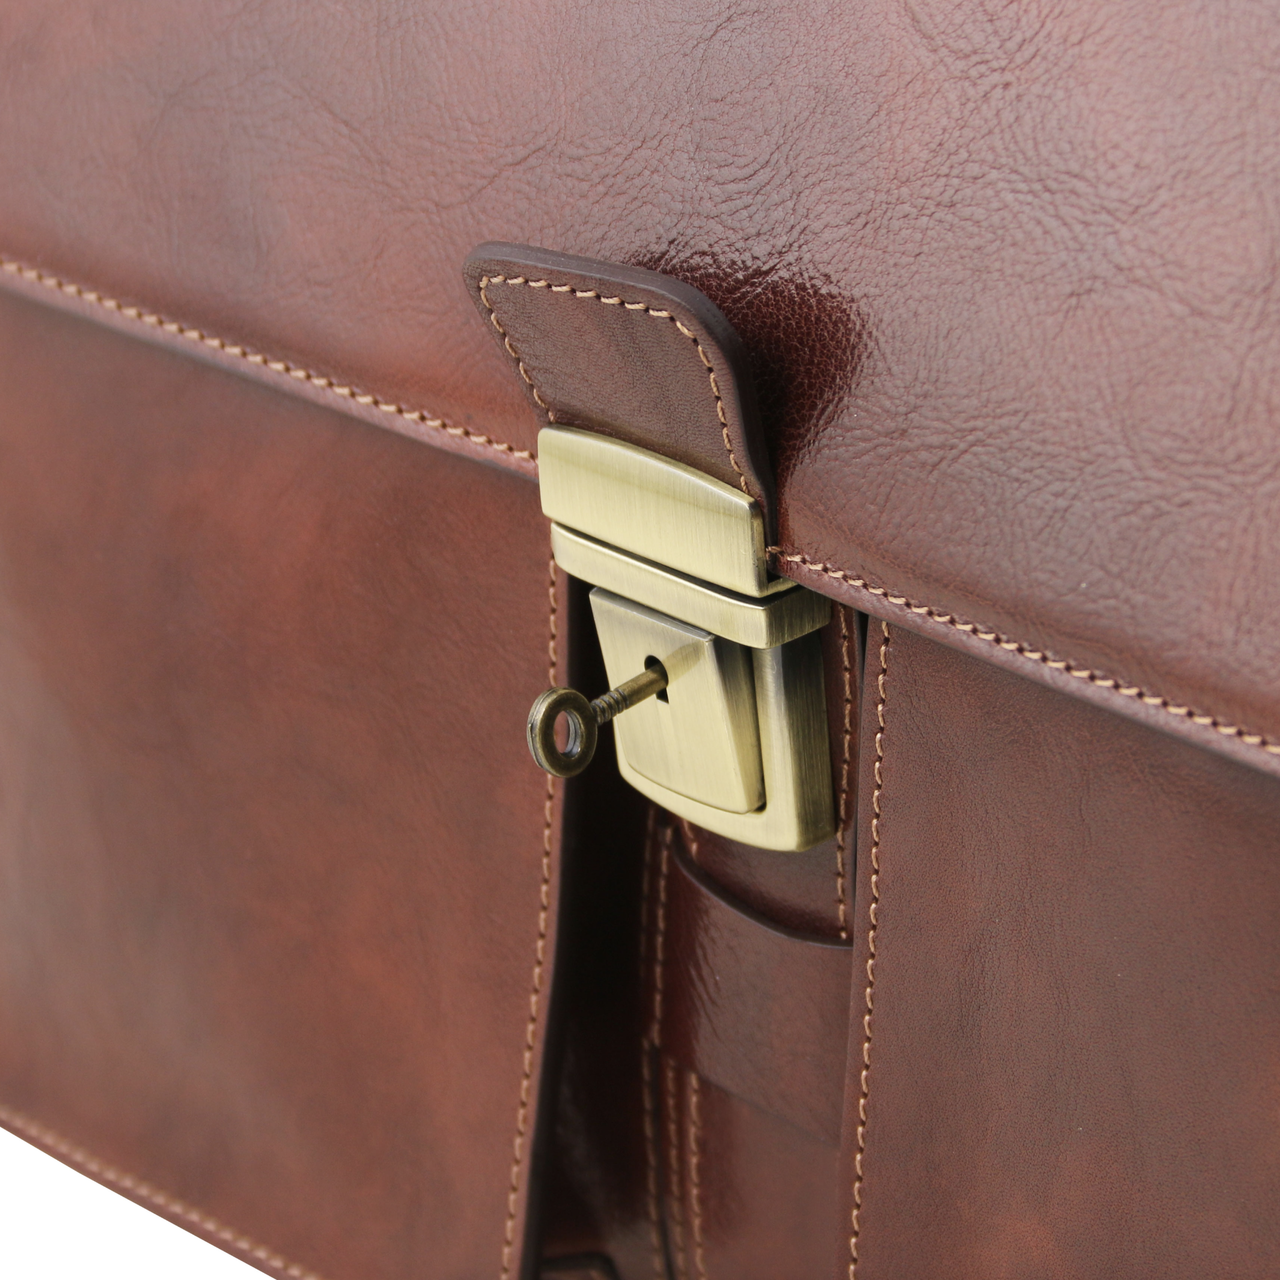 Buccio Palermo Italian Leather Messenger Bag Briefcase